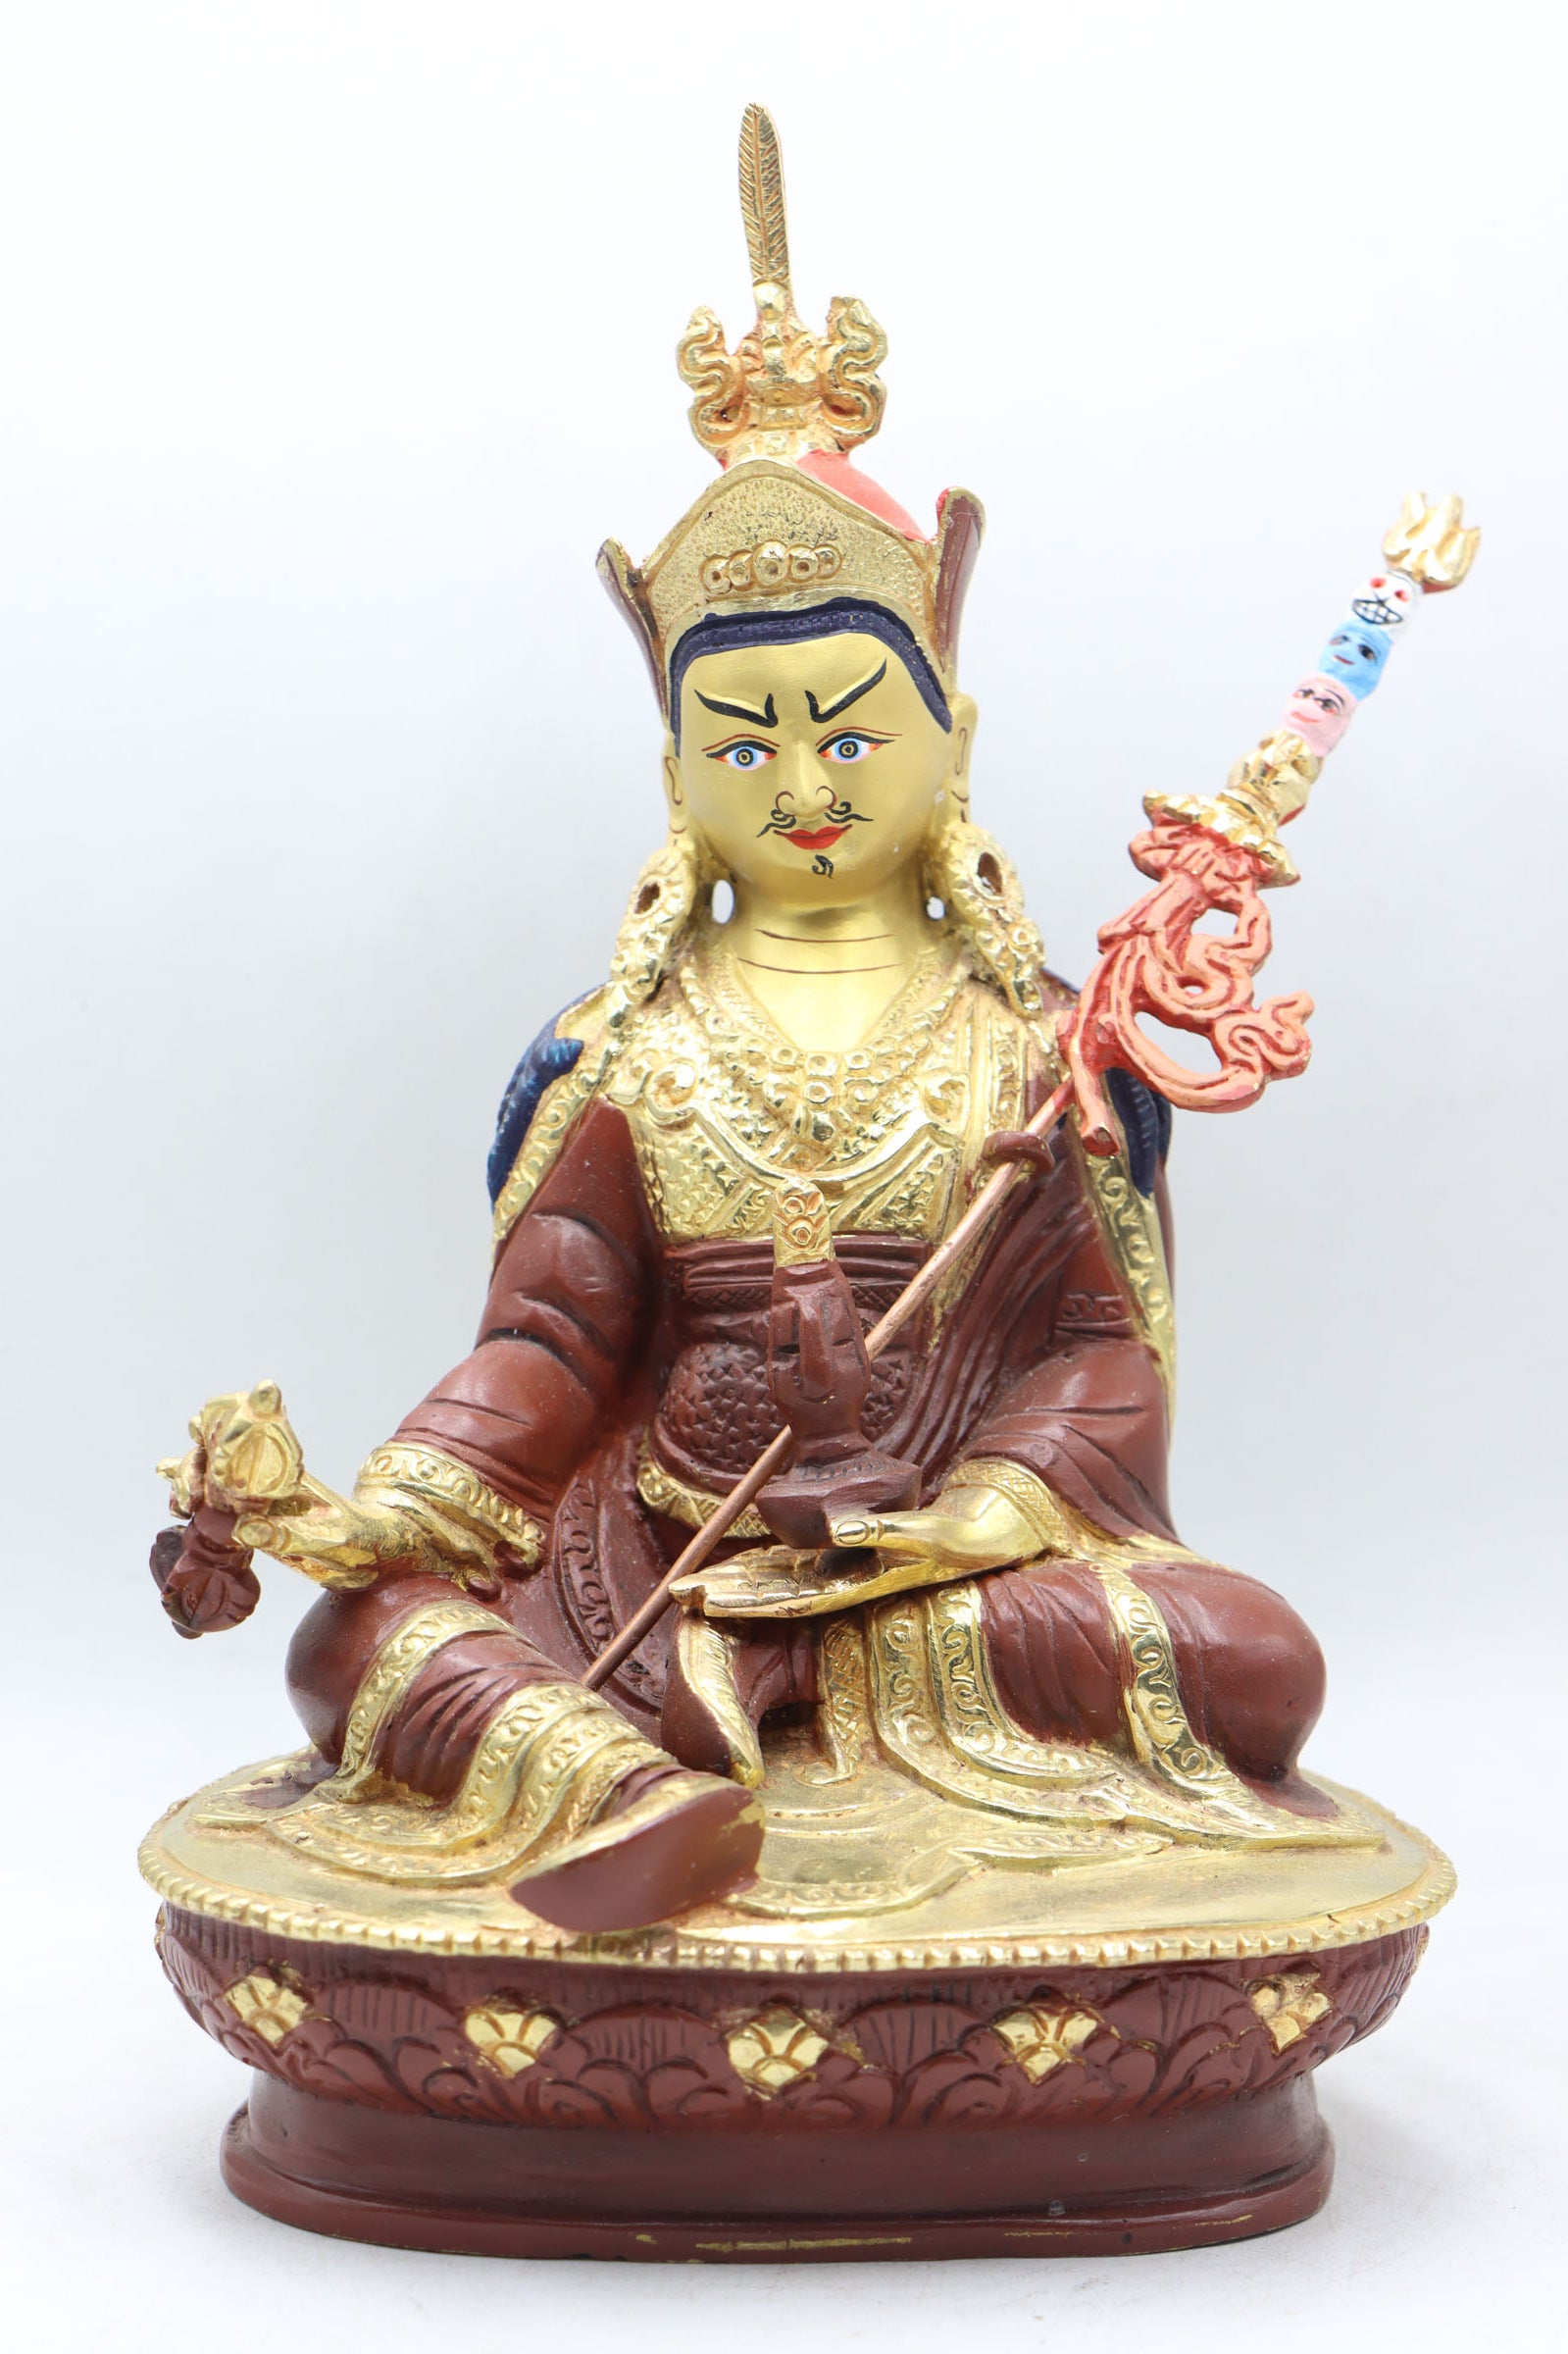 Guru Rinpoche Statue for  wisdom, compassion, and spiritual power.